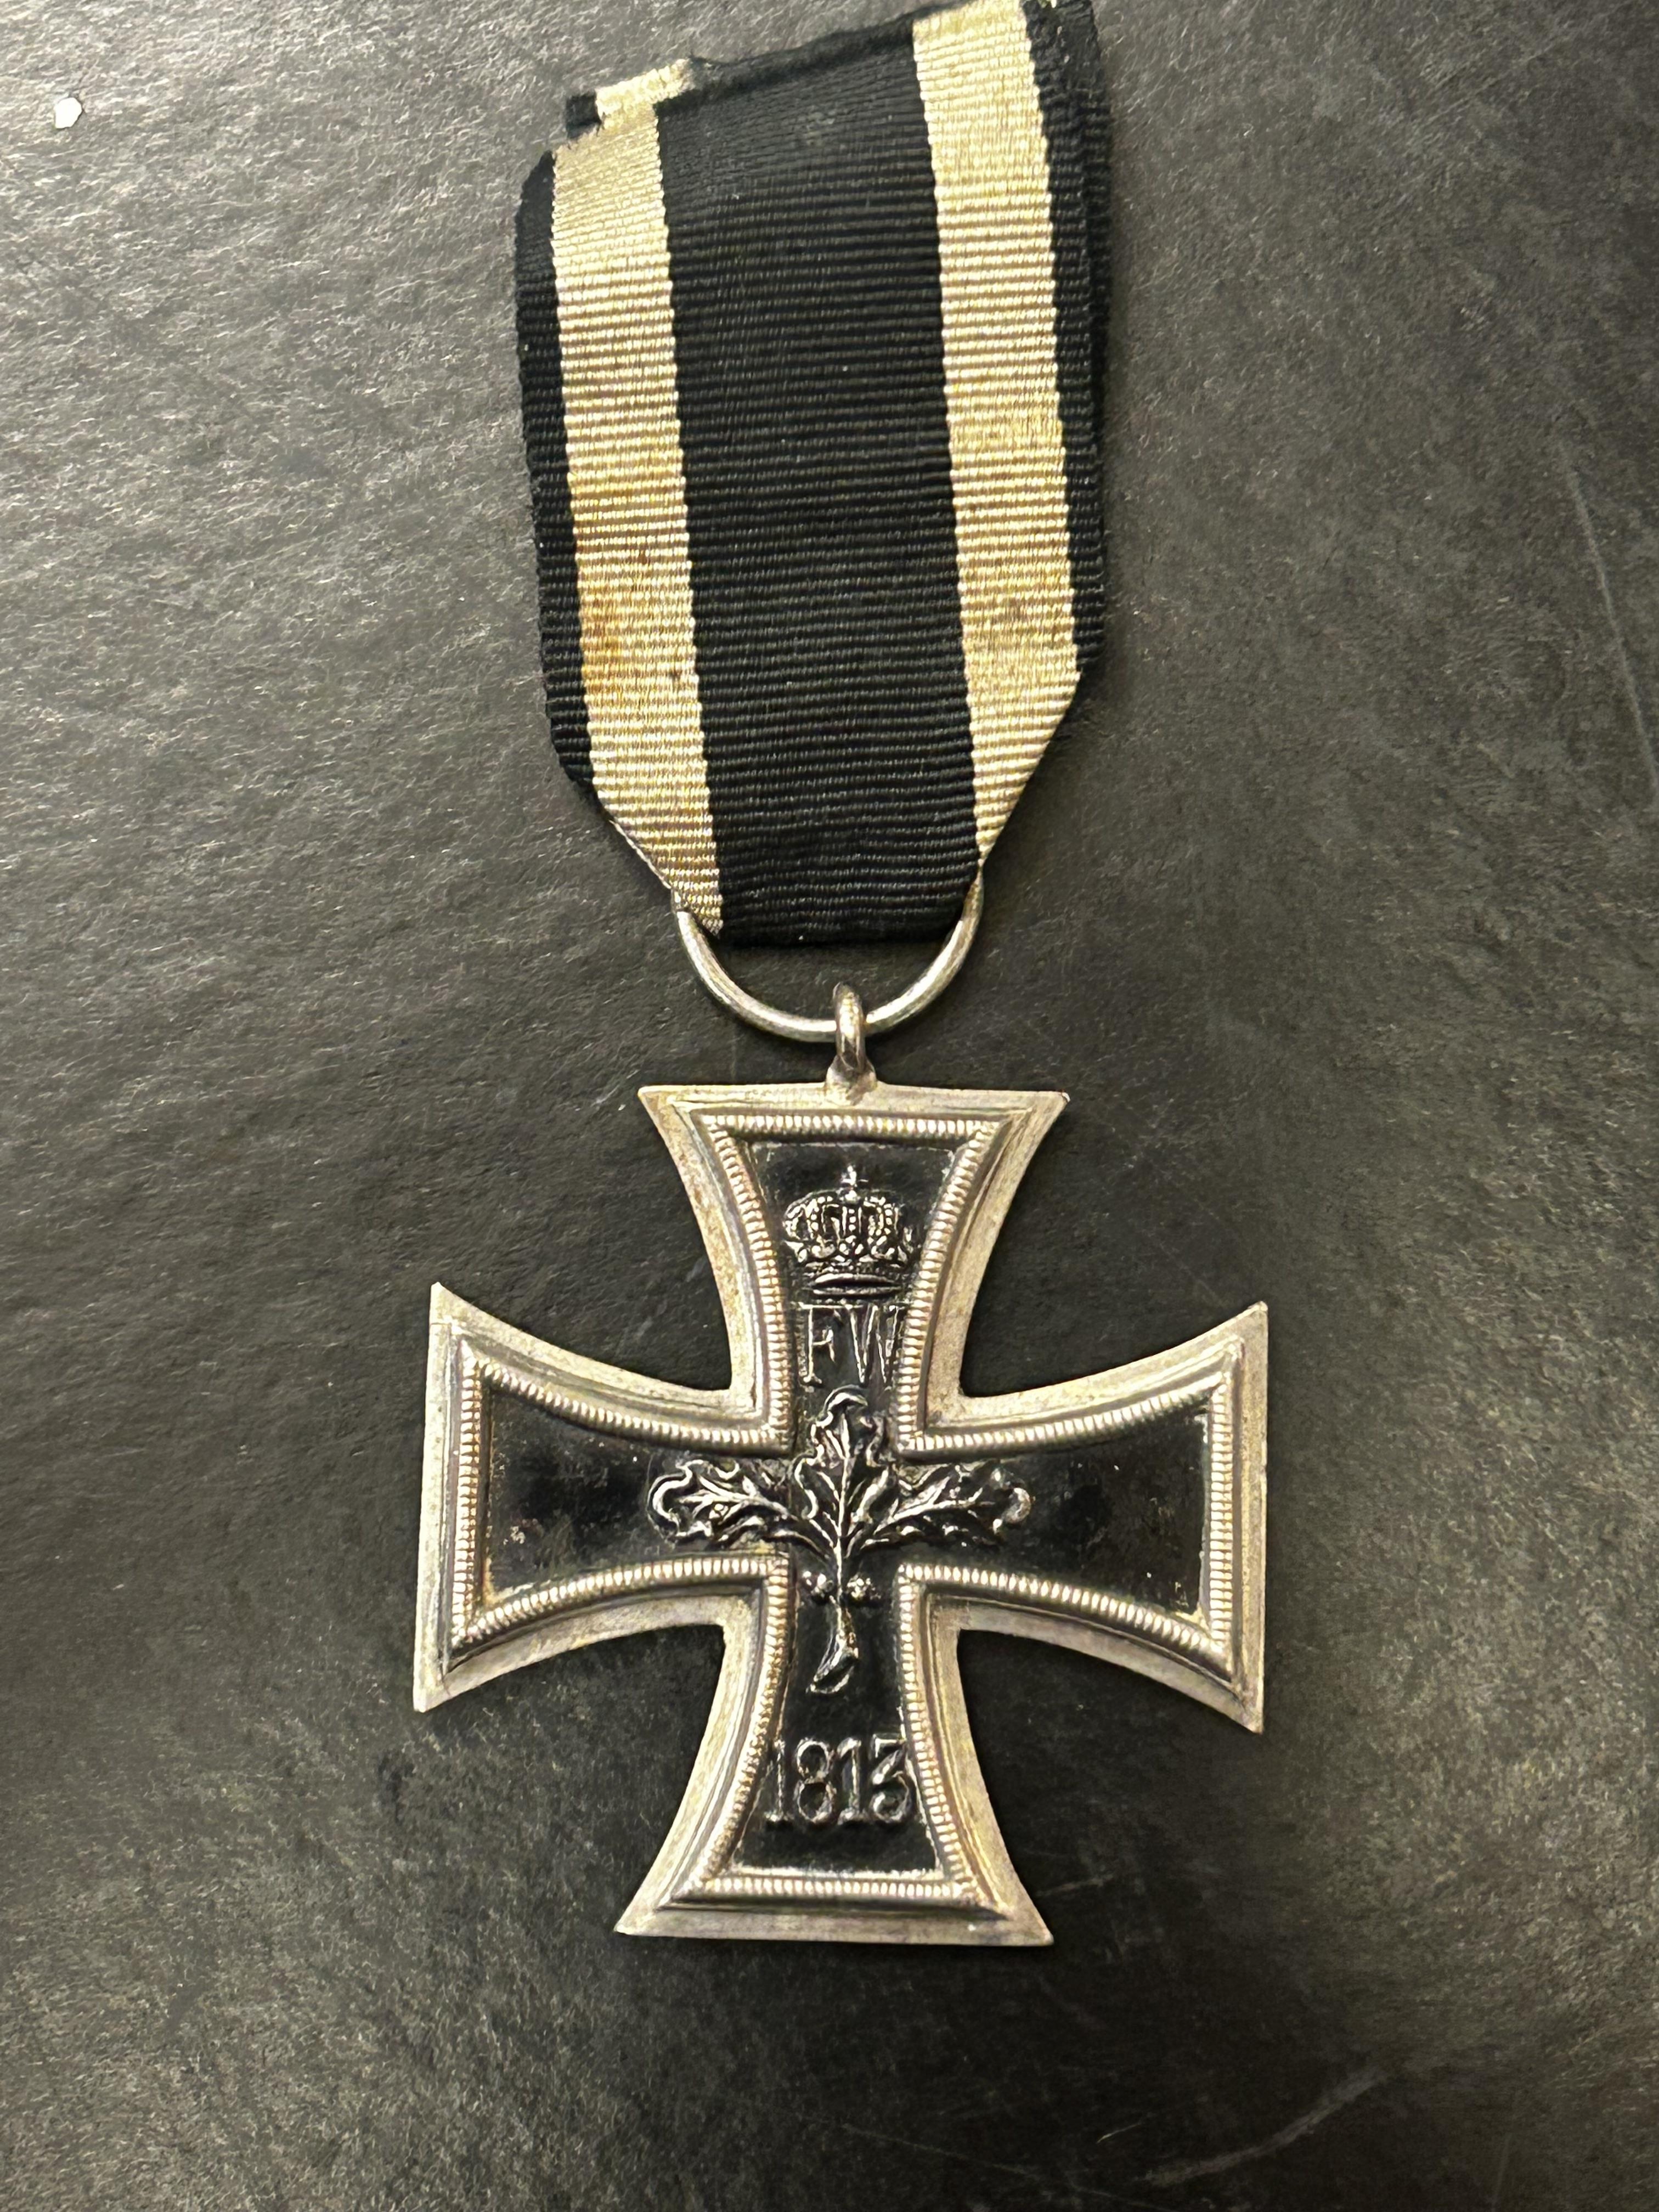 A WWI German iron cross 1913, 1914